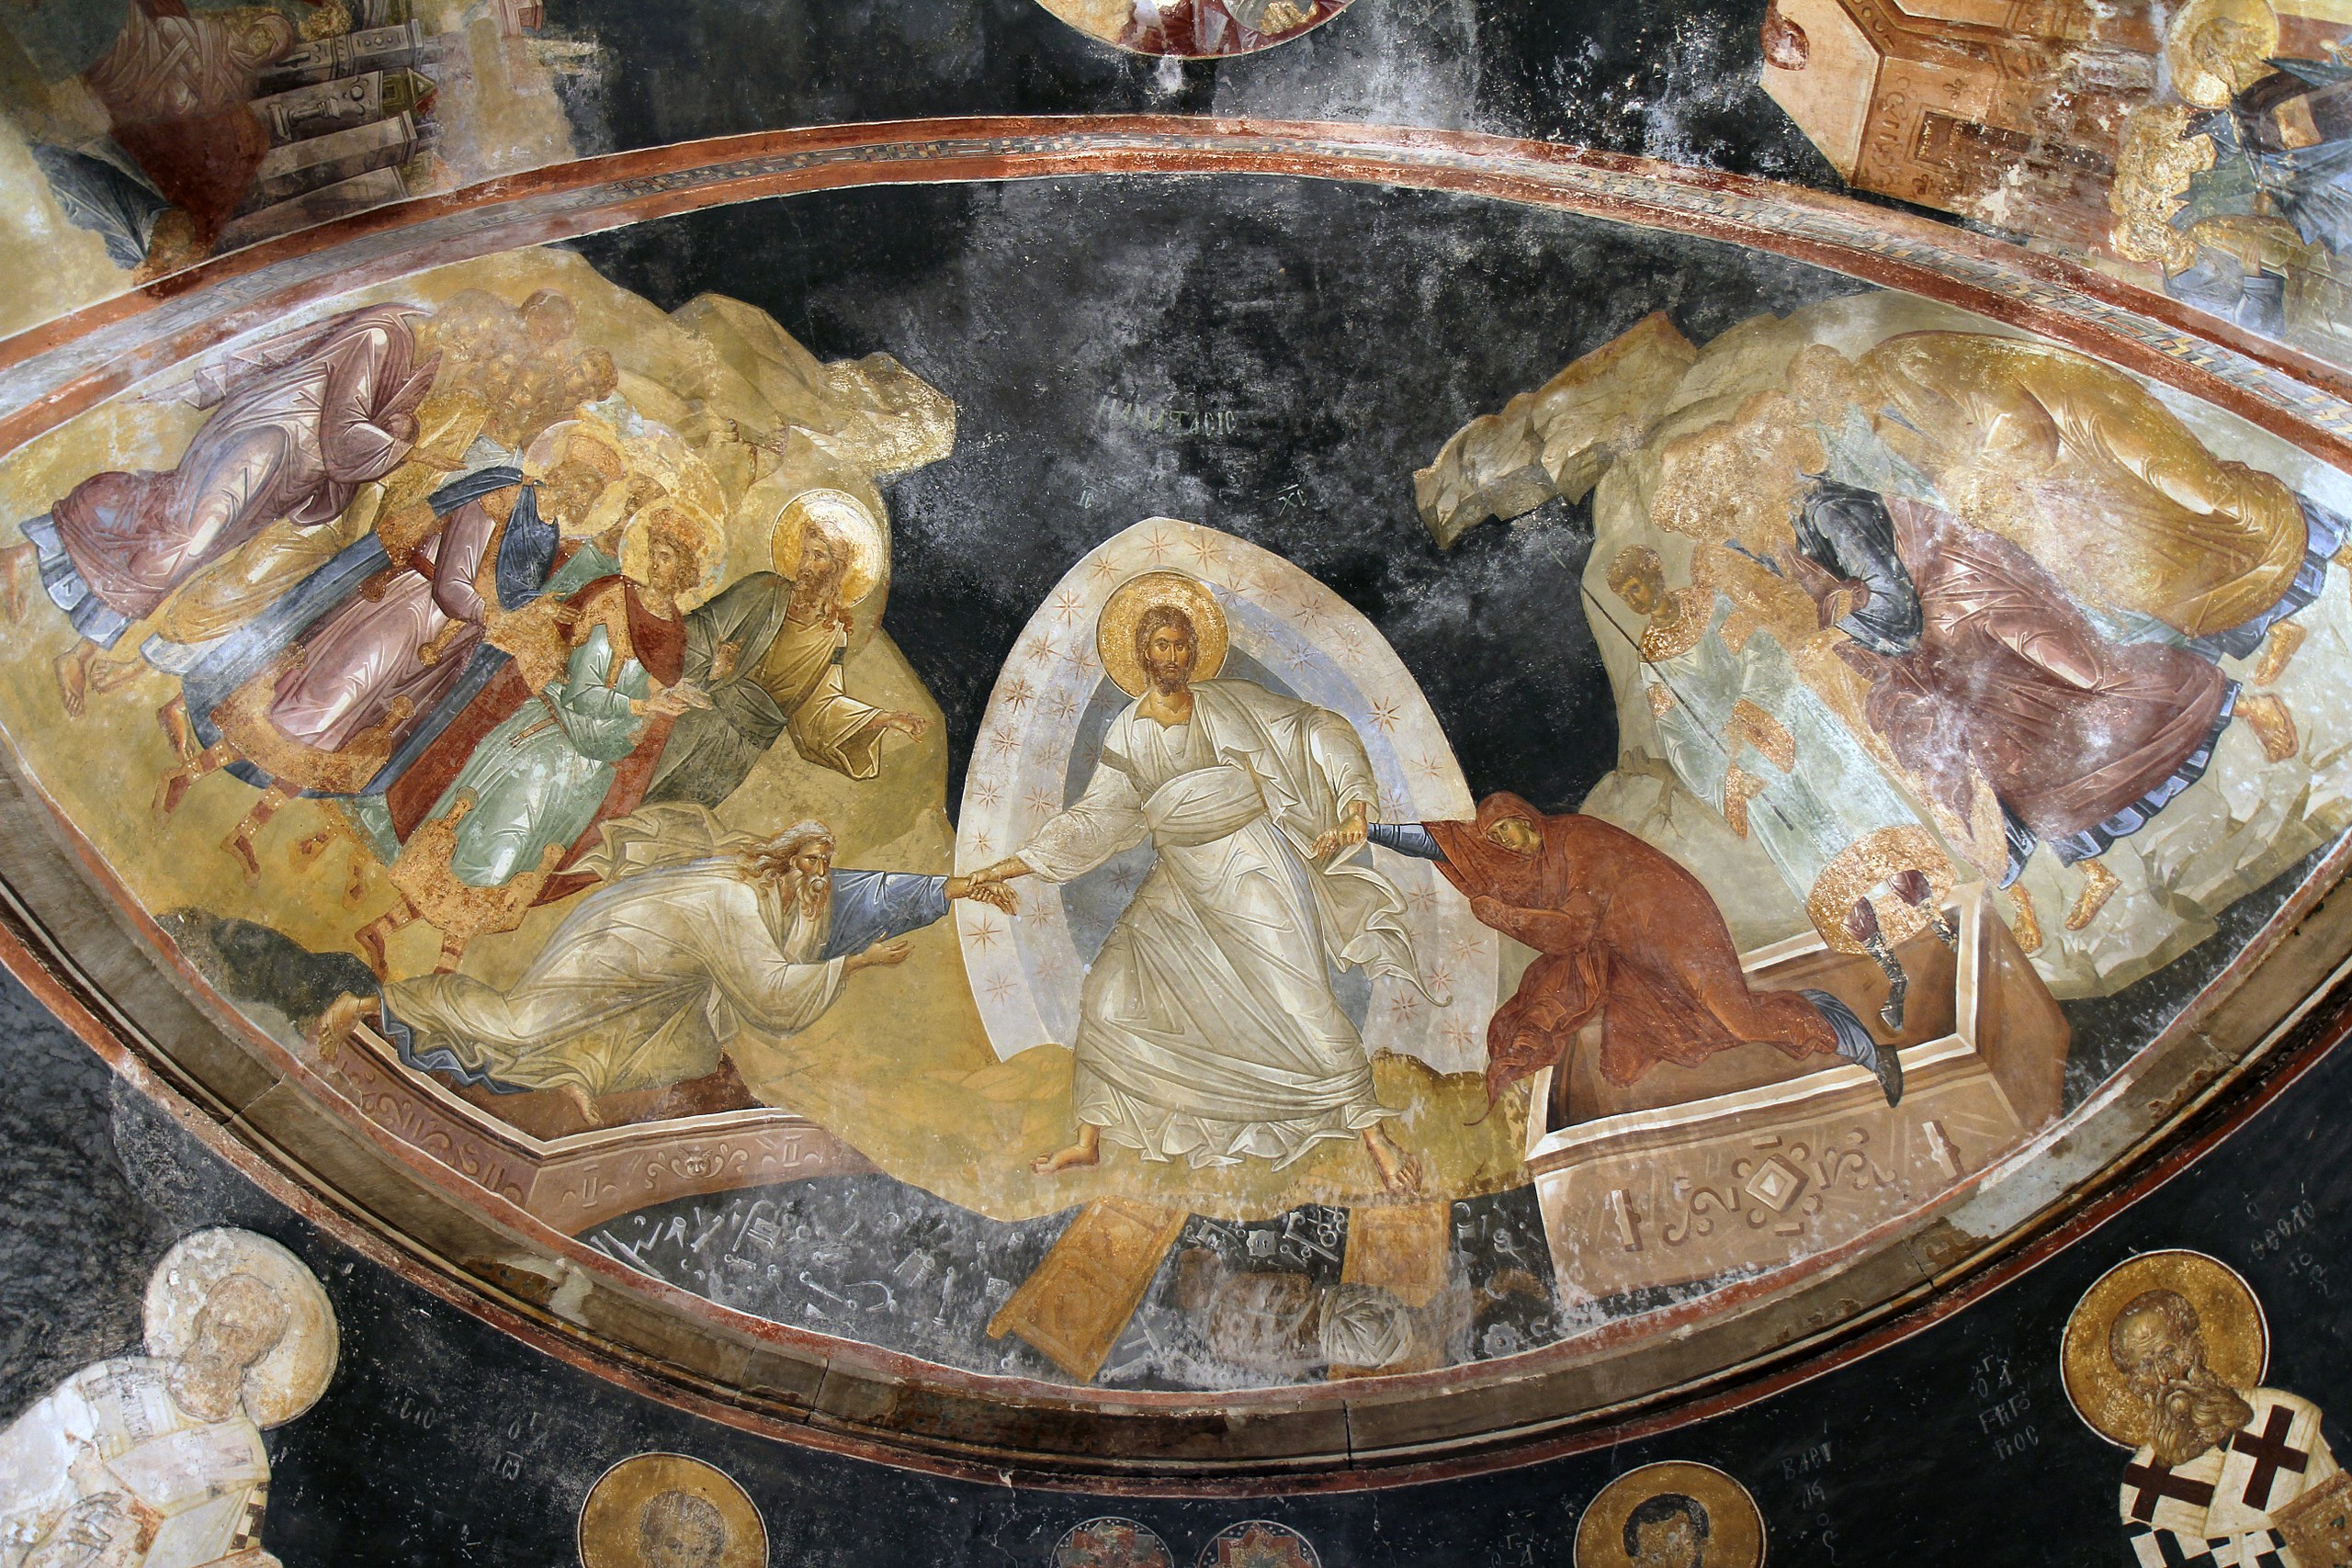 Anastasis (Harrowing of Hell), c. 1310–20, fresco, Church of the Holy Savior of Chora/Kariye Museum, Istanbul (photo: Till.niermann, CC BY-SA 3.0)